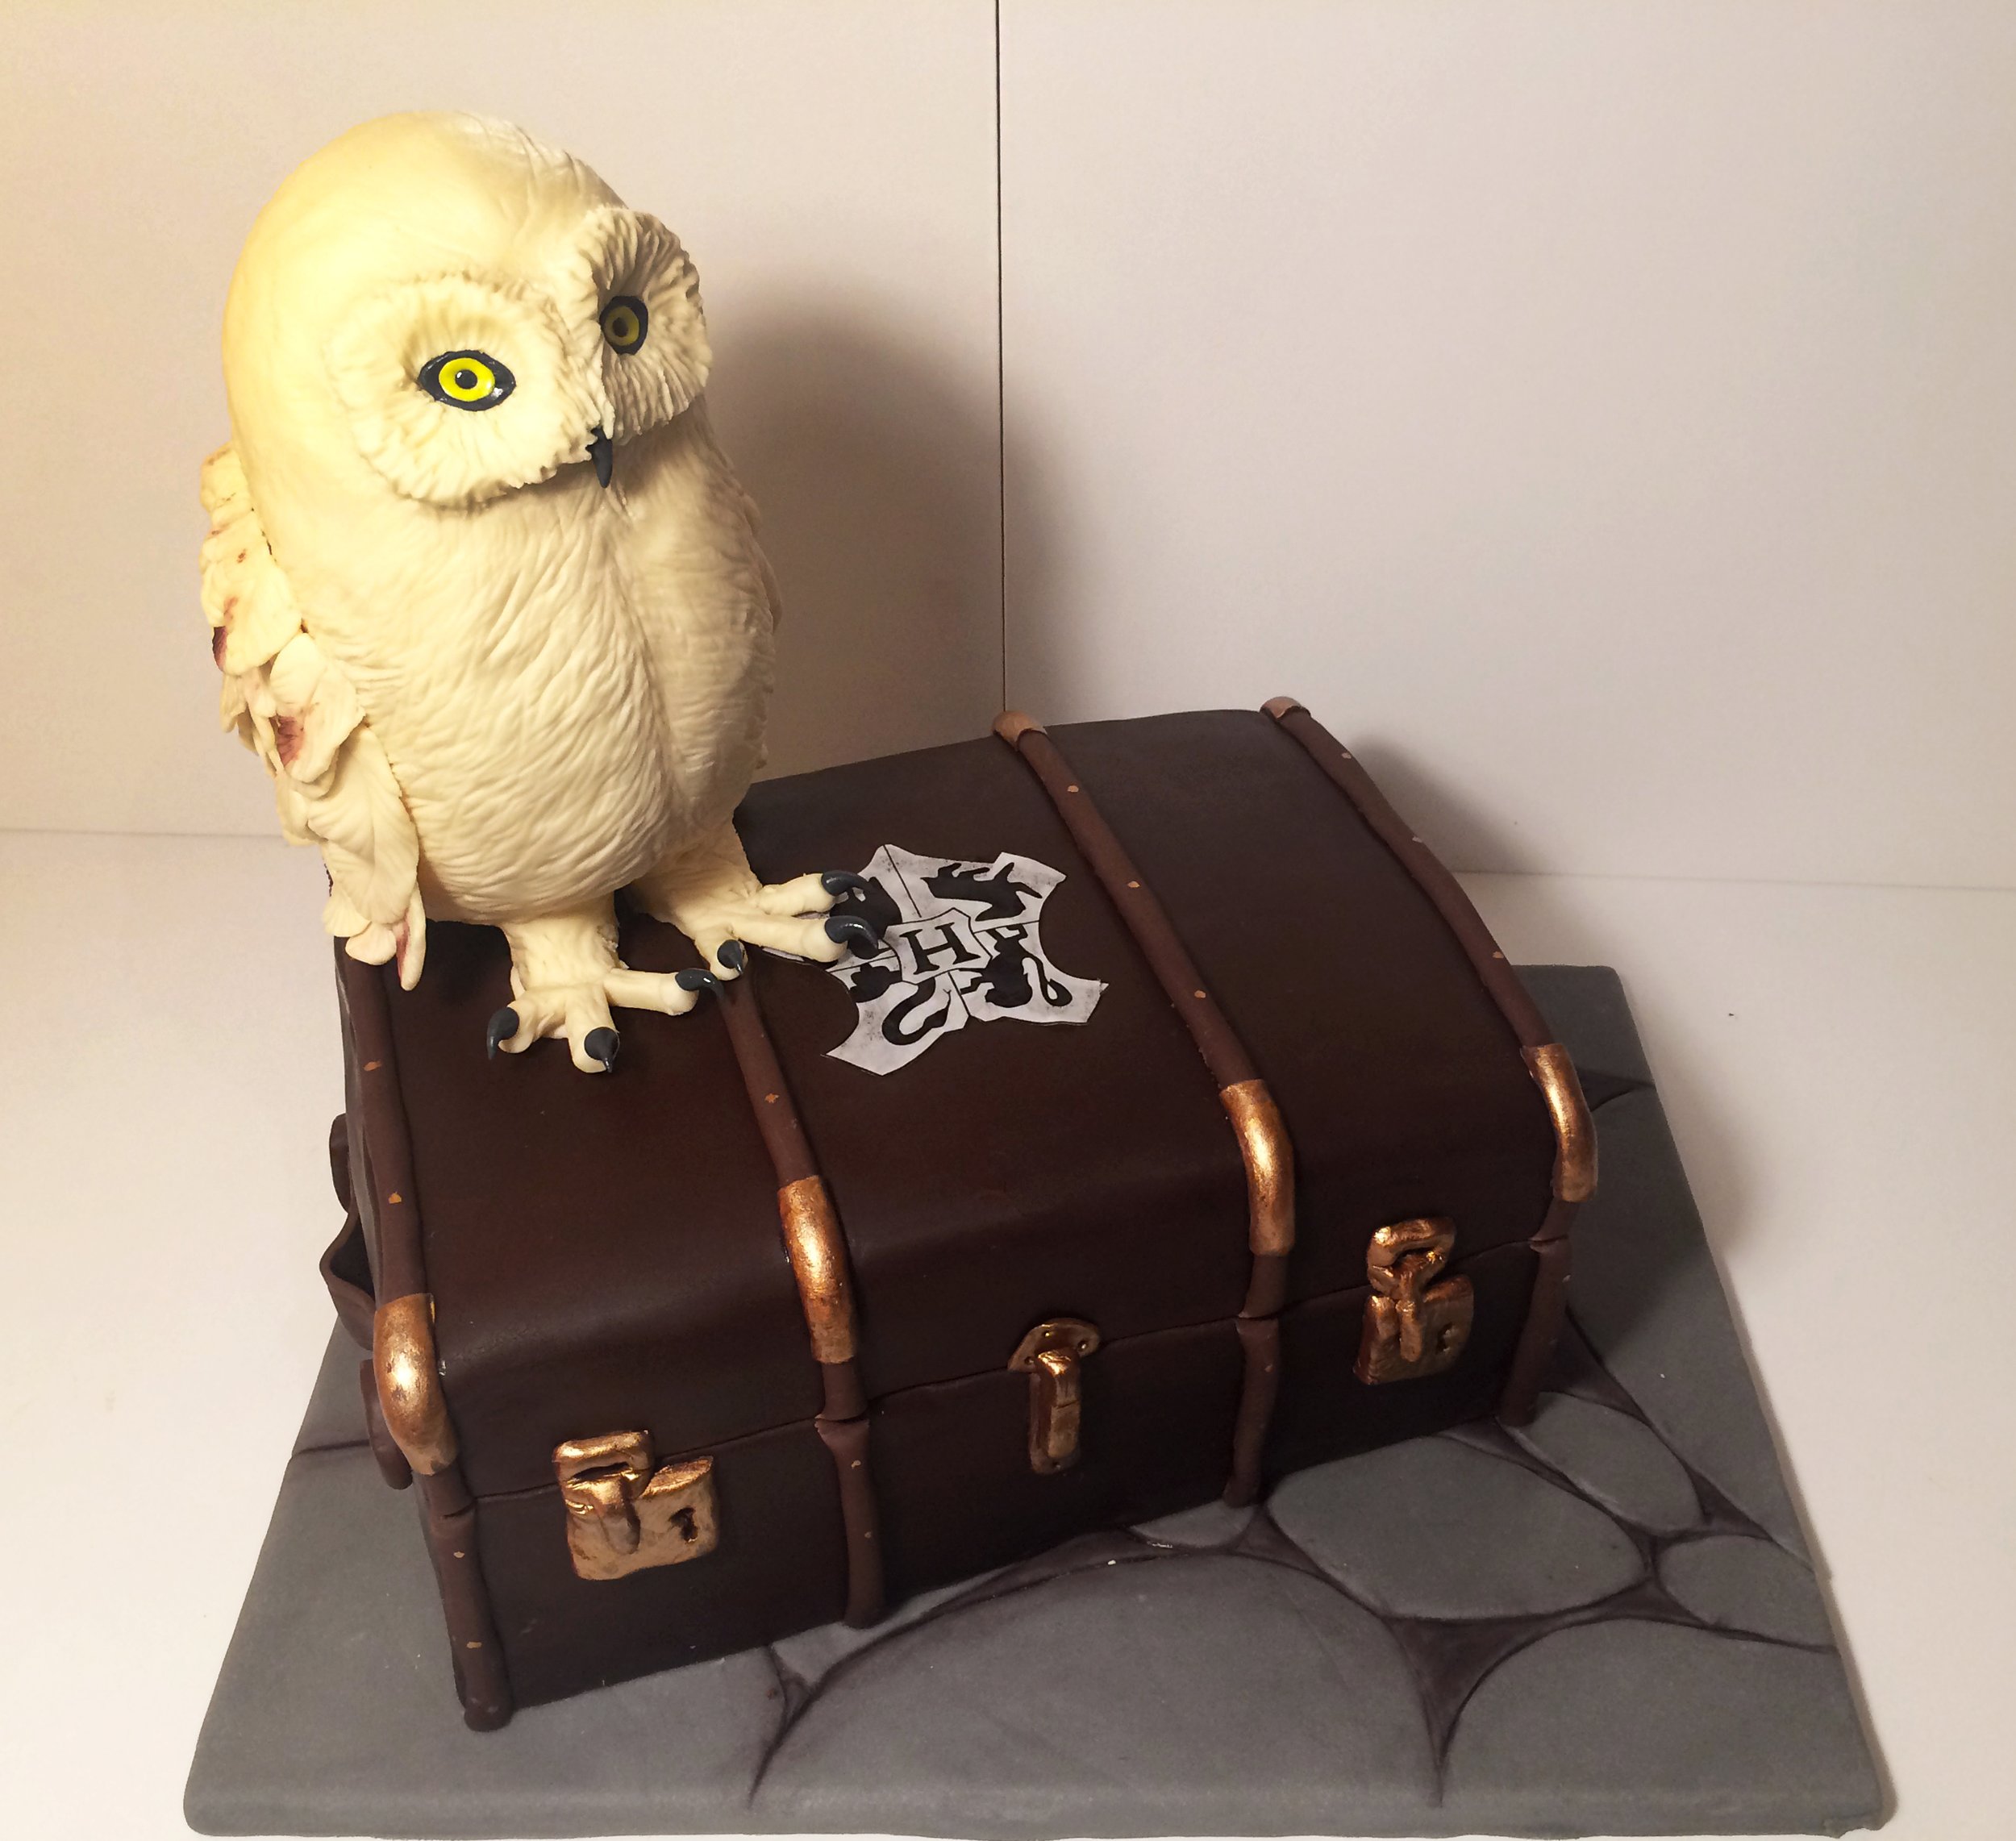 Catcakes - Modelado de la lechuza de Harry Potter realizado en fondant.